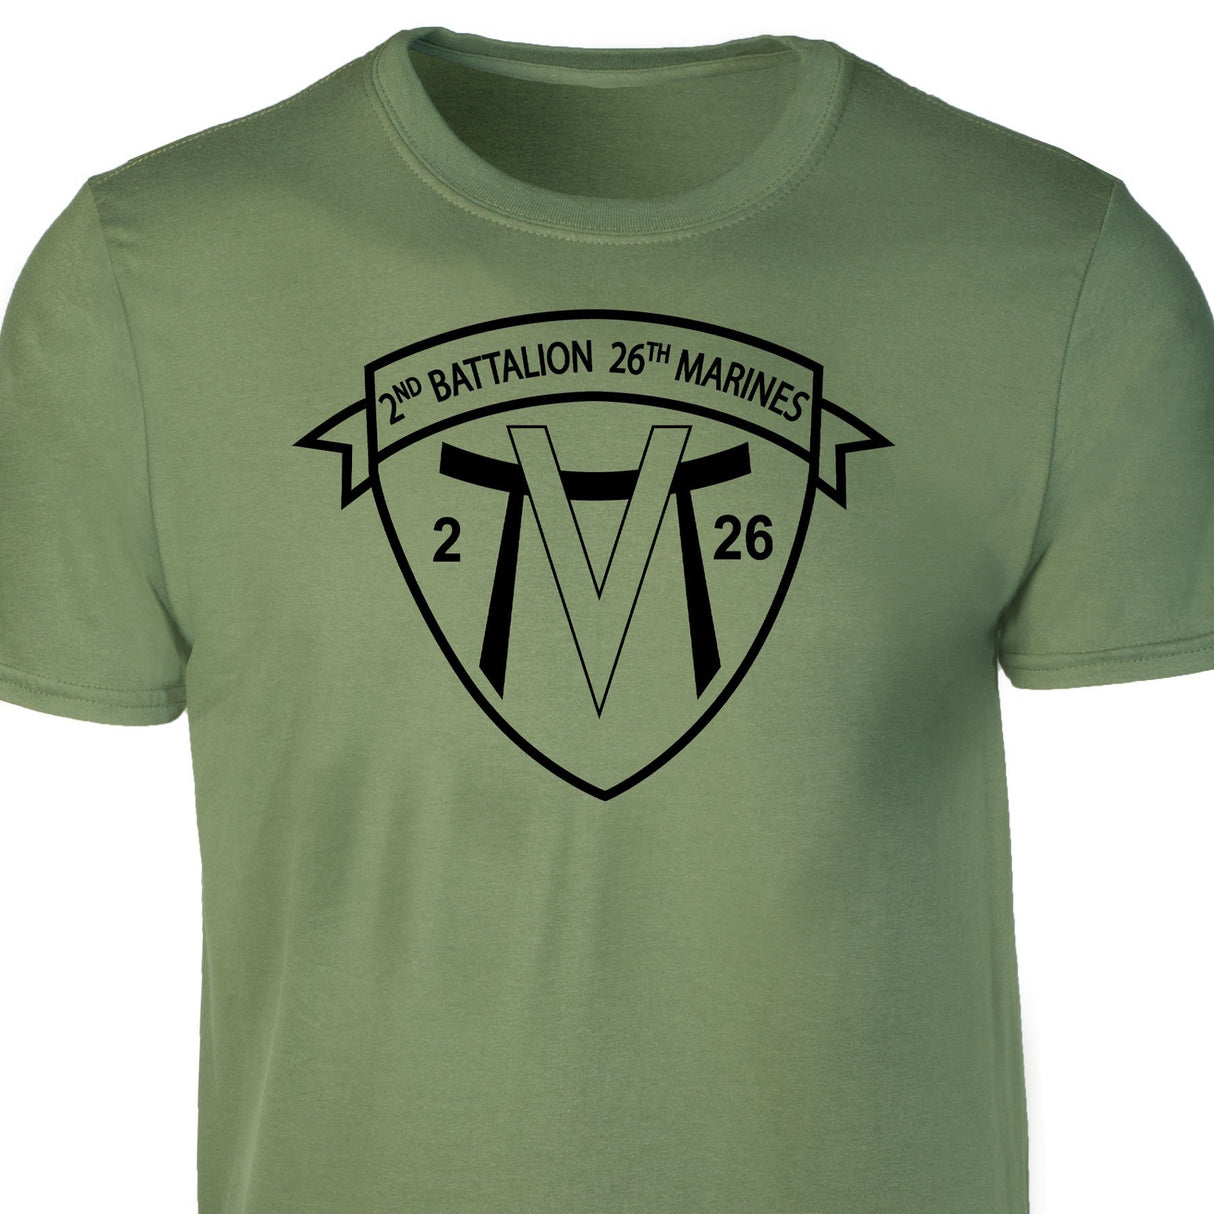 2nd Battalion 26th Marines T-shirt - SGT GRIT